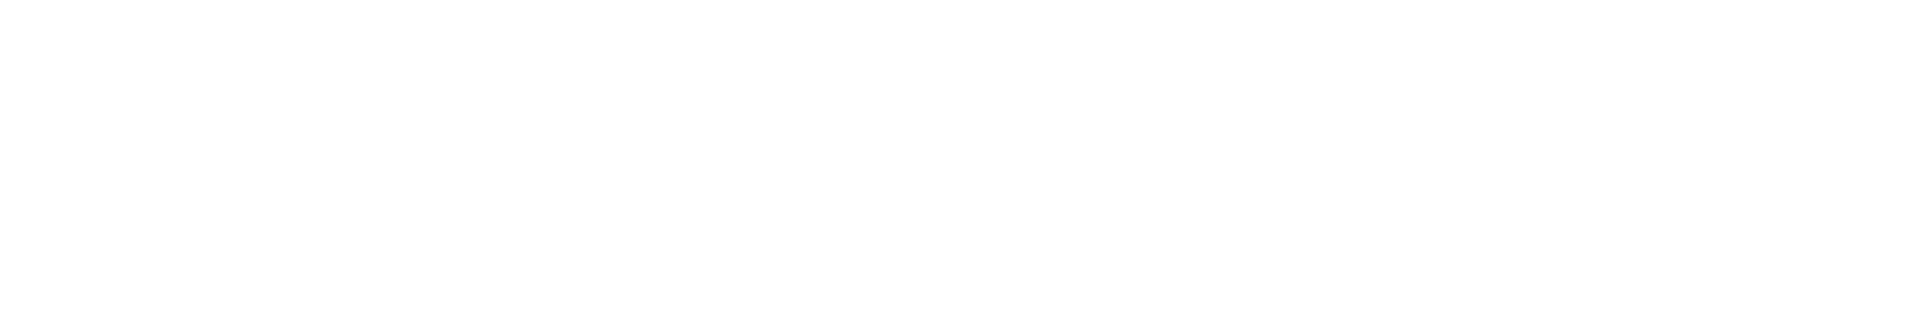 Scottish Music Industry Association logo